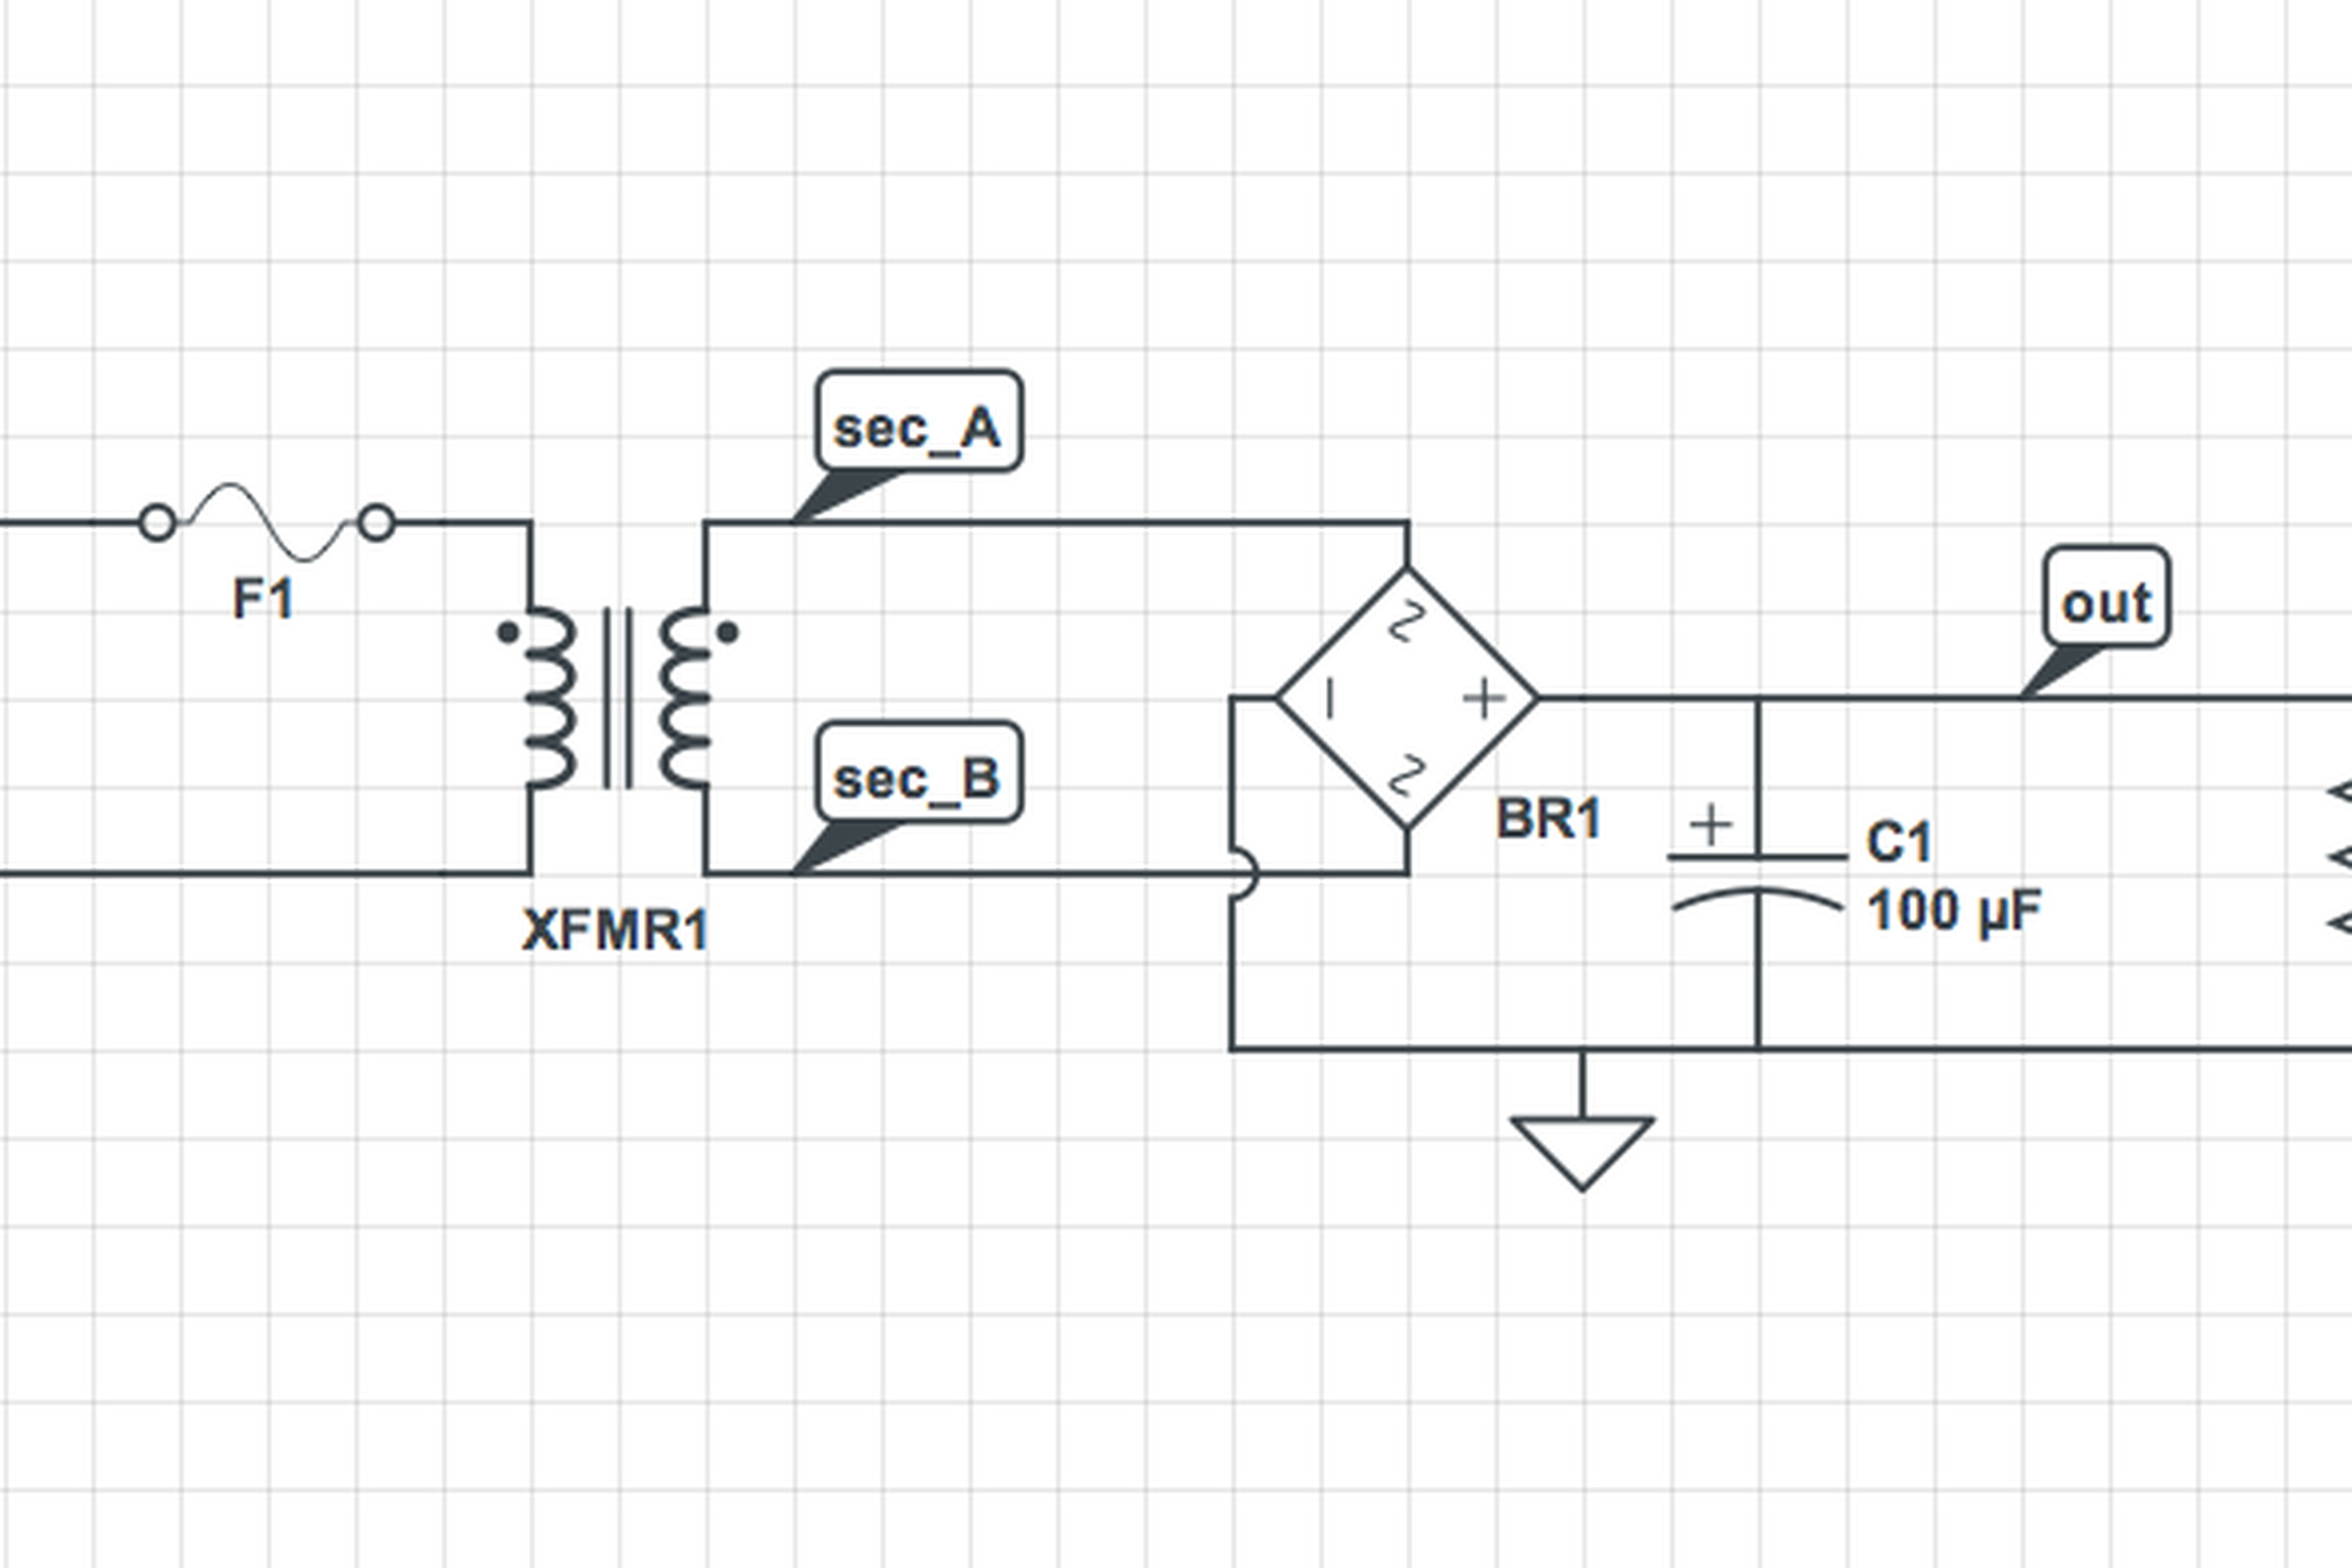 CircuitLab schematic